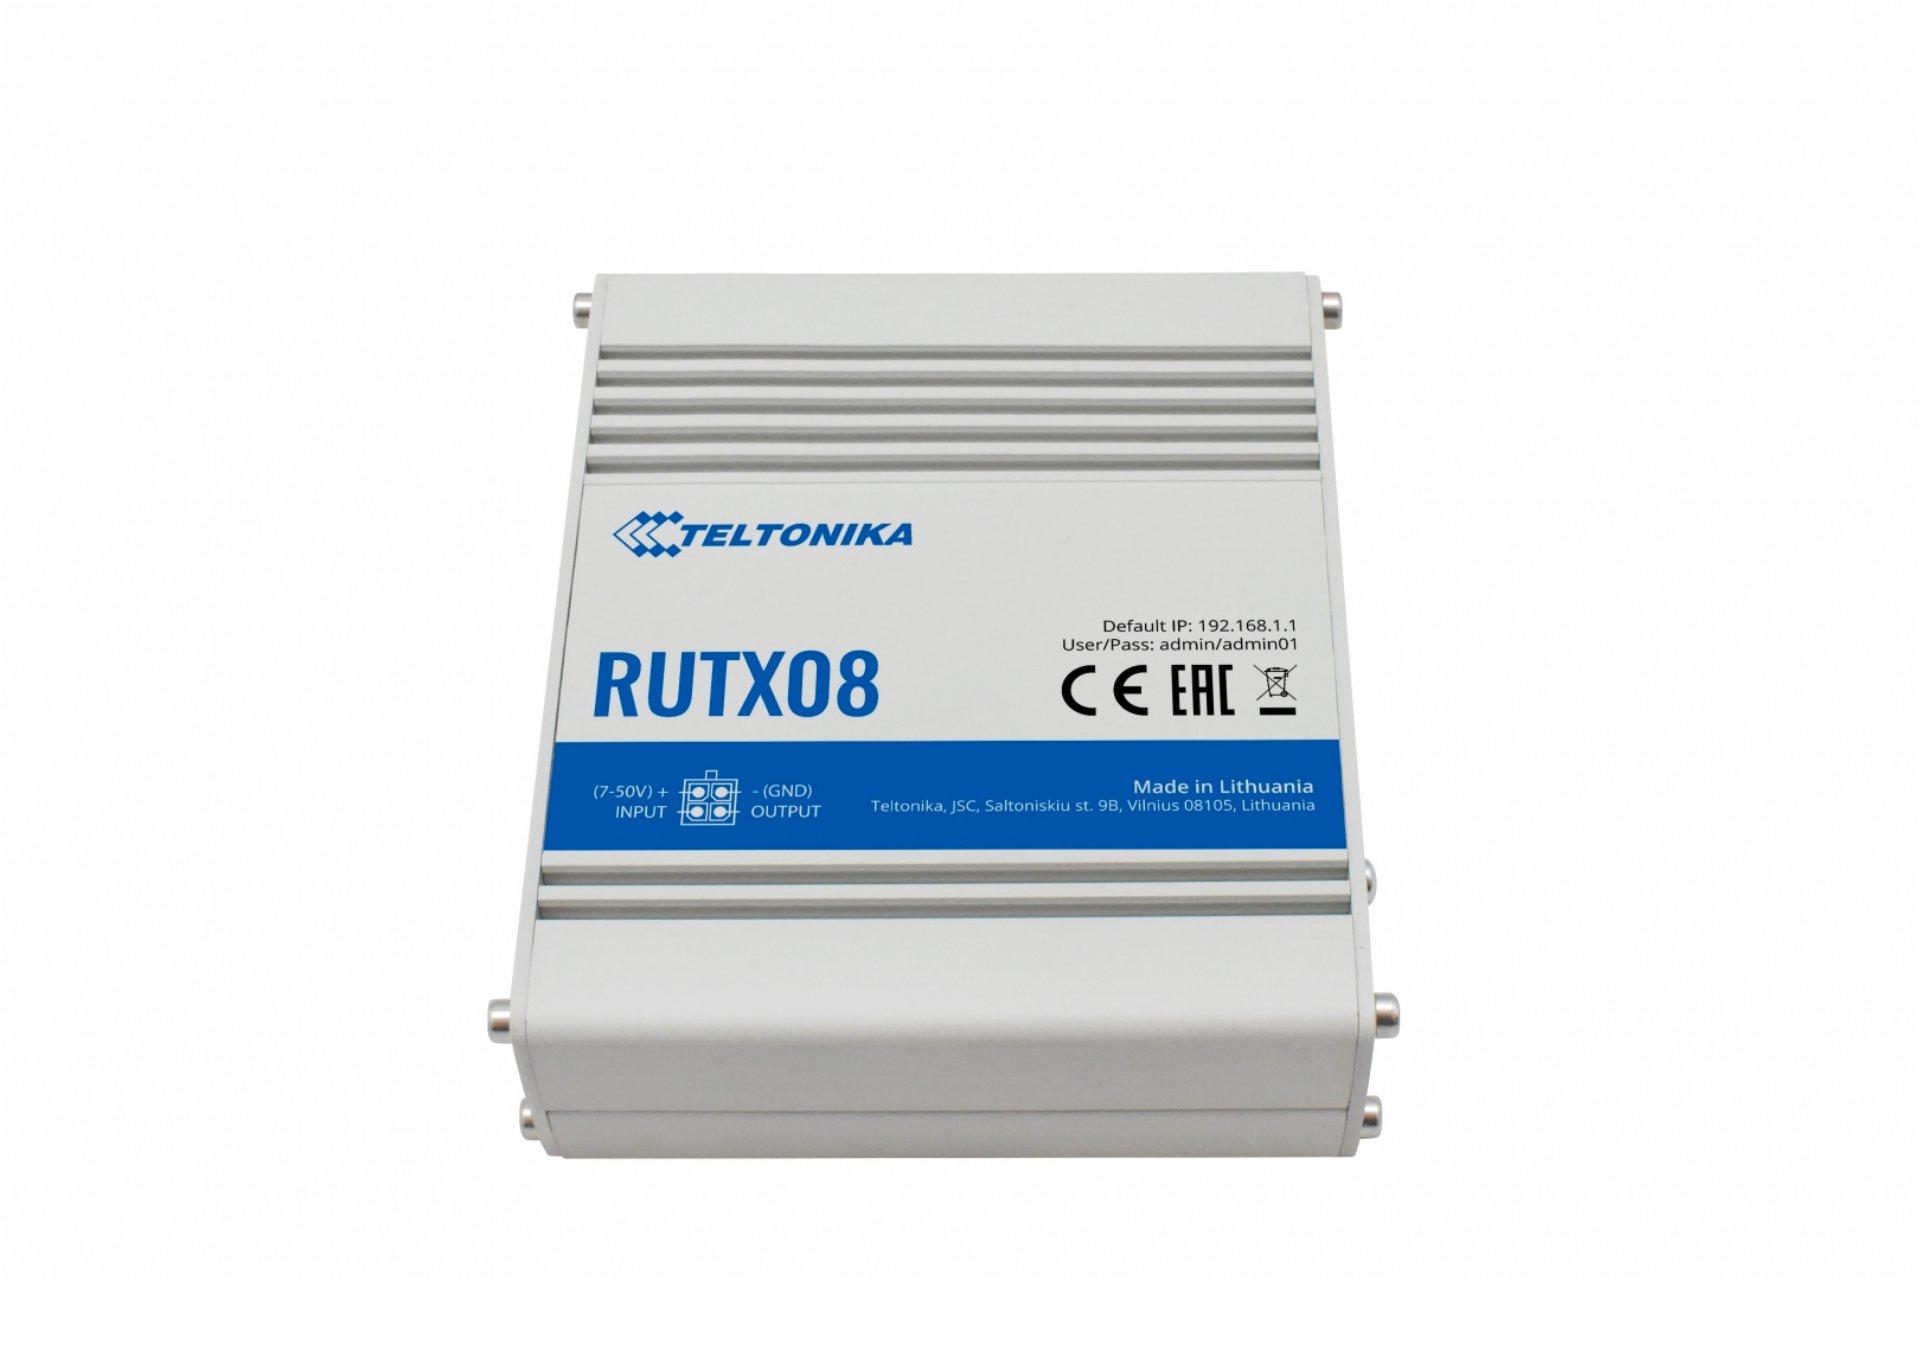 Teltonika RUTX08 Router Front Image